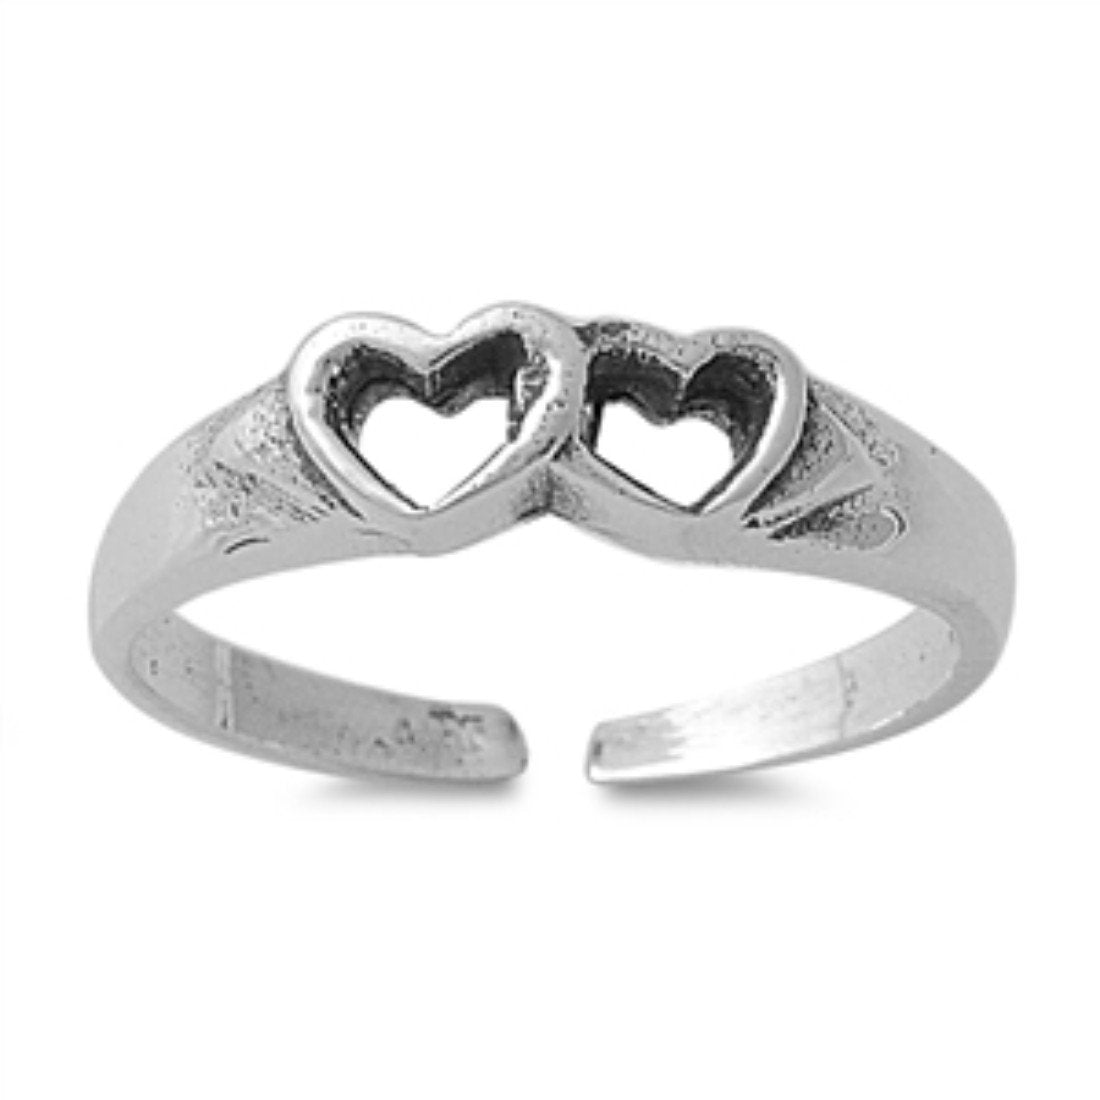 Silver Interlocked 2 Hearts Toe Ring Adjustable Band 925 Sterling Silver (4mm)